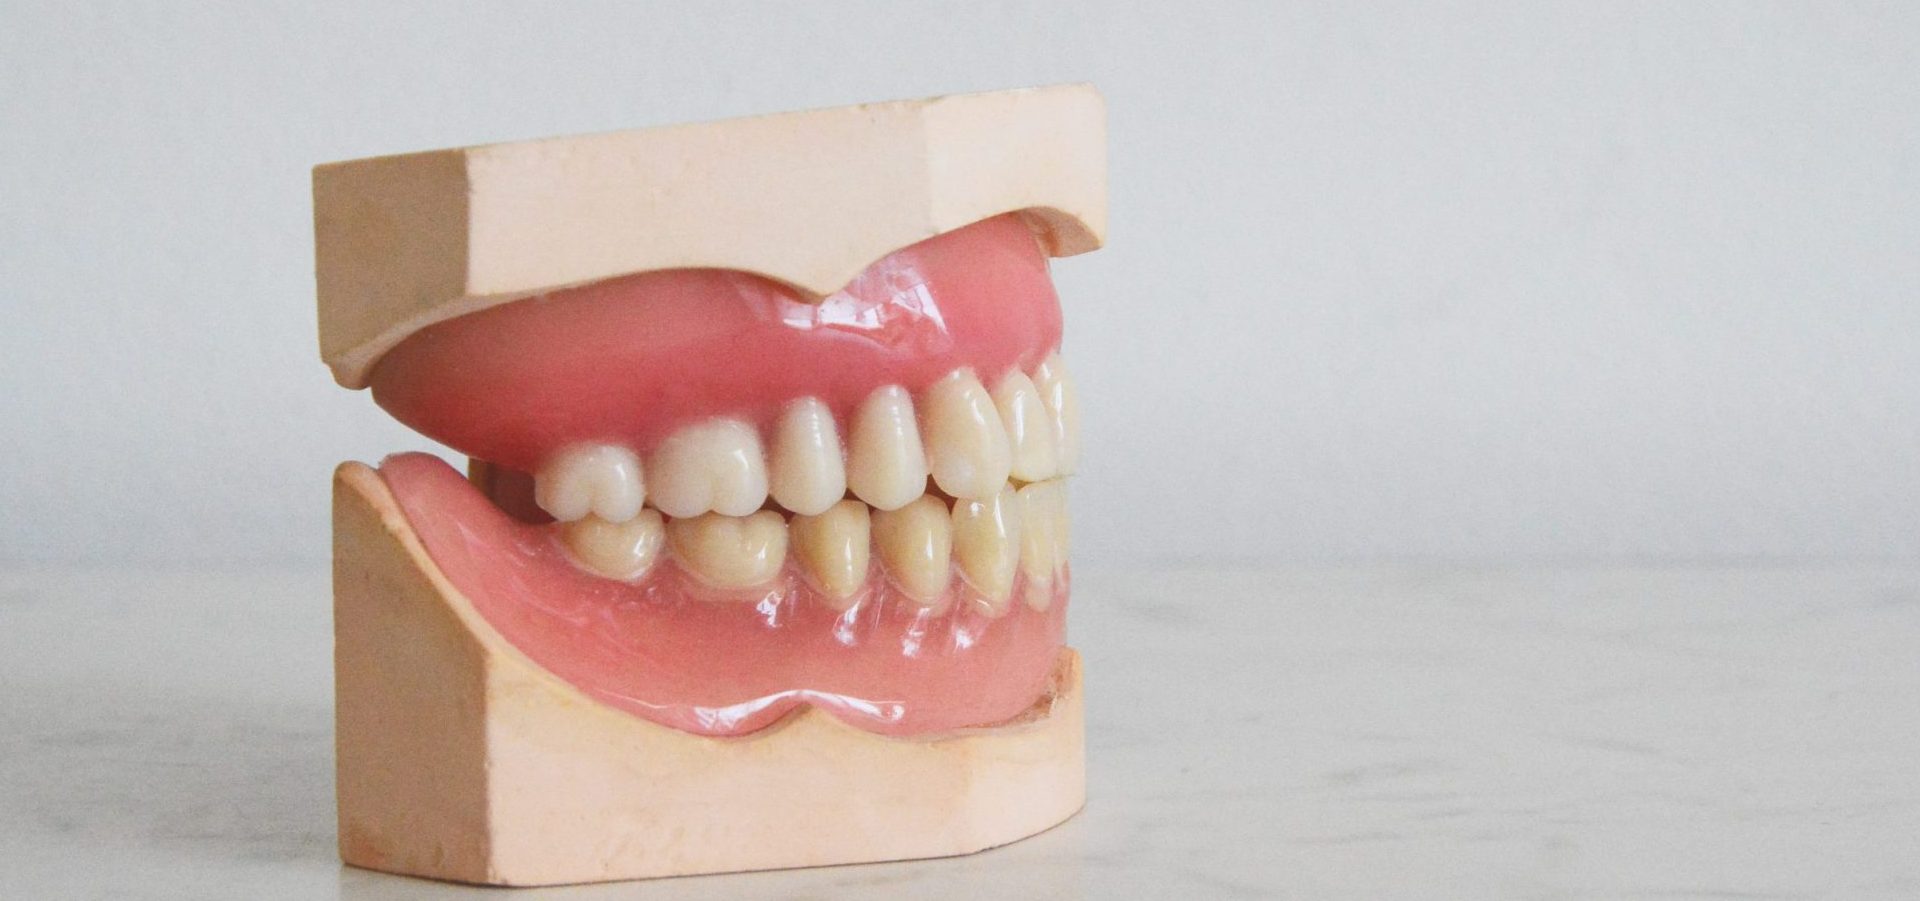 teeth and gums